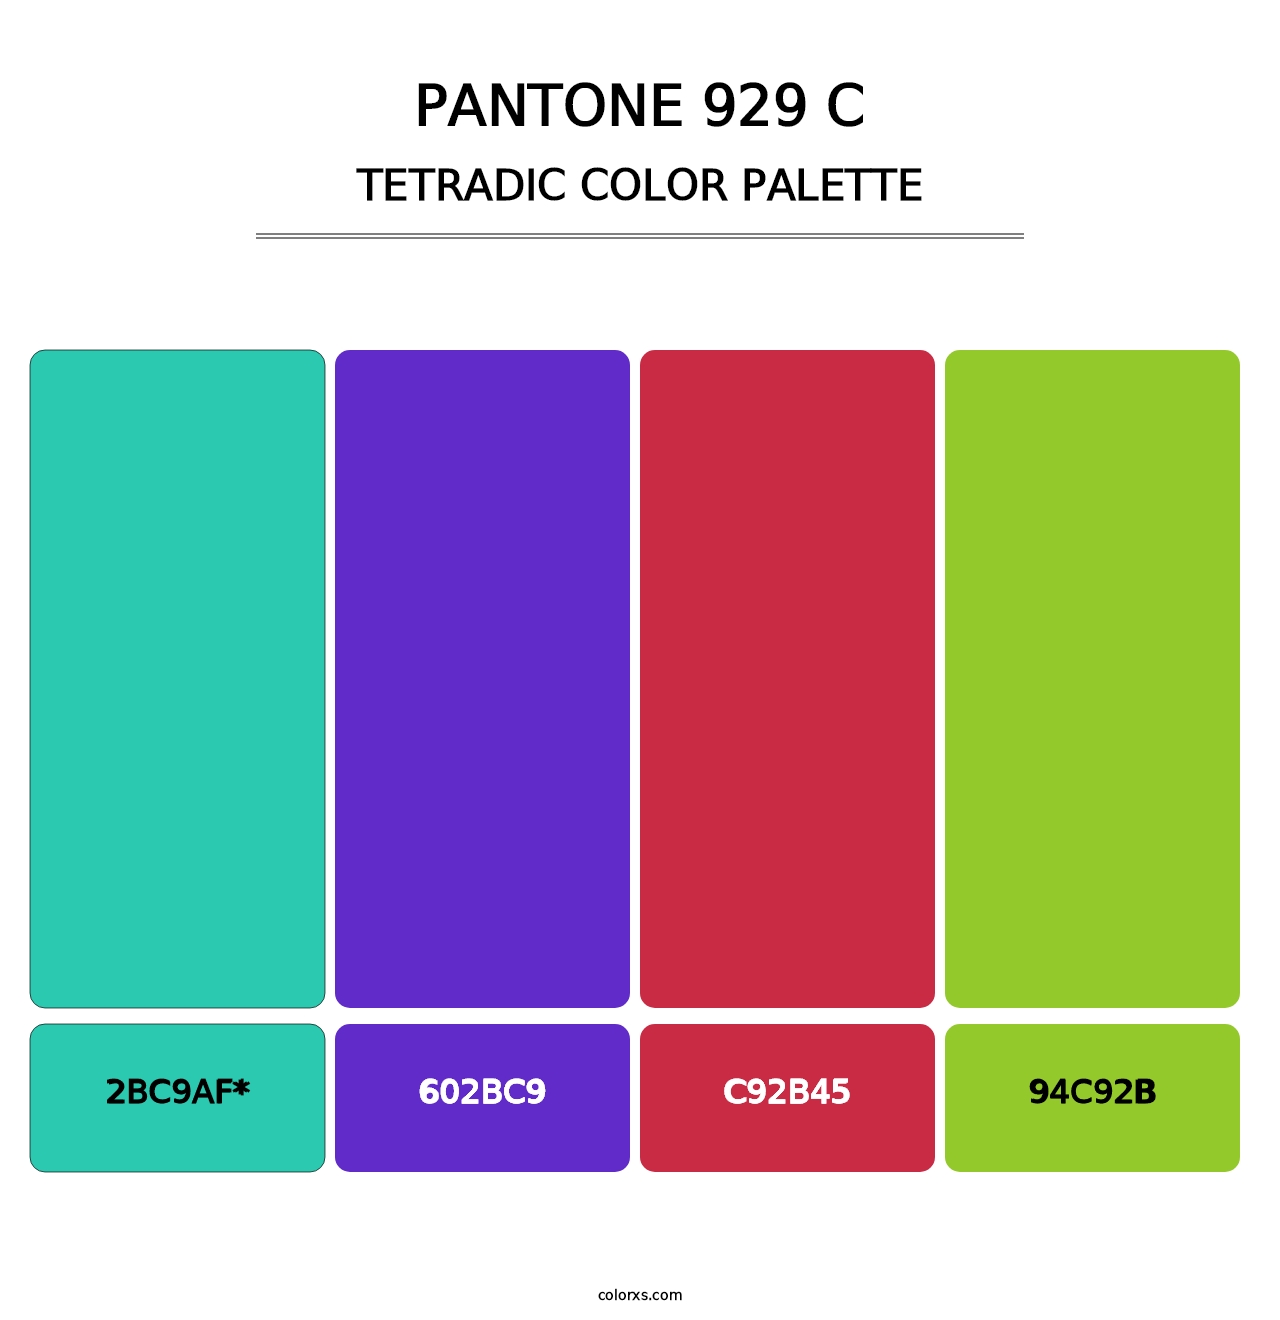 PANTONE 929 C - Tetradic Color Palette